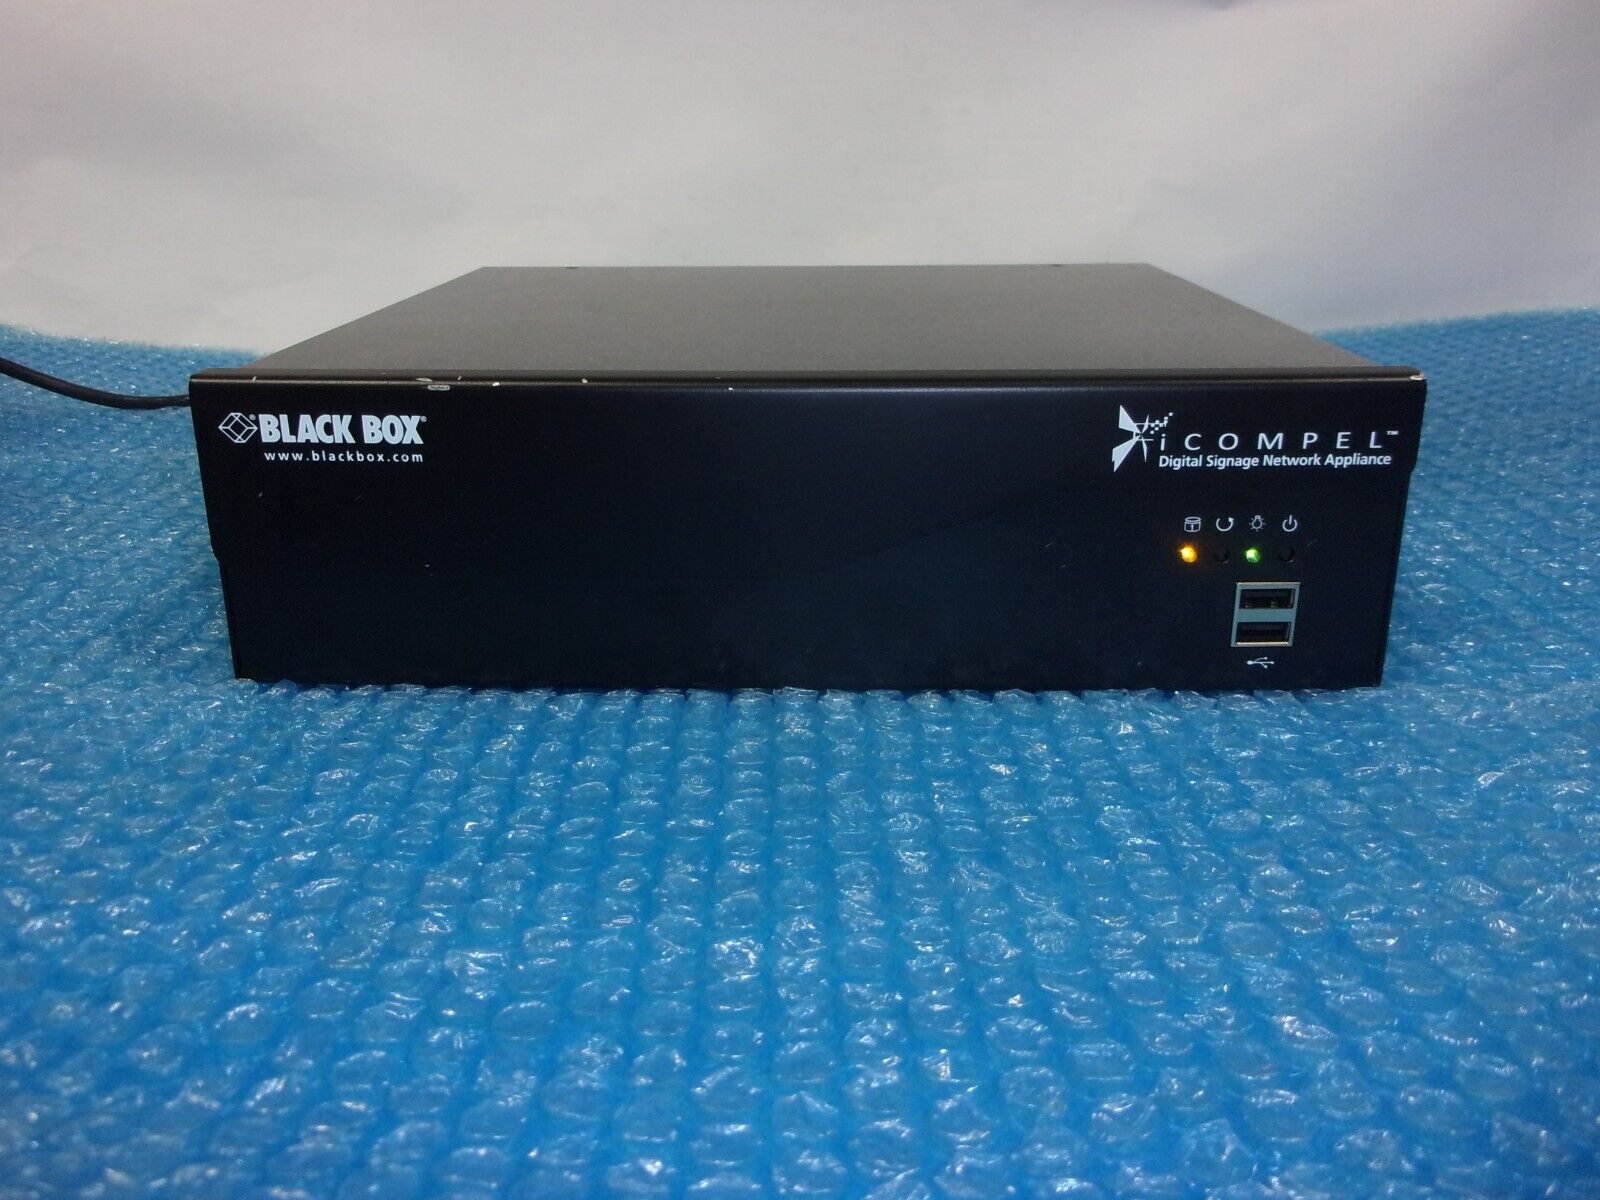 Black Box iCompel ICSS-2U-PU-N Digital Signage Network Appliance